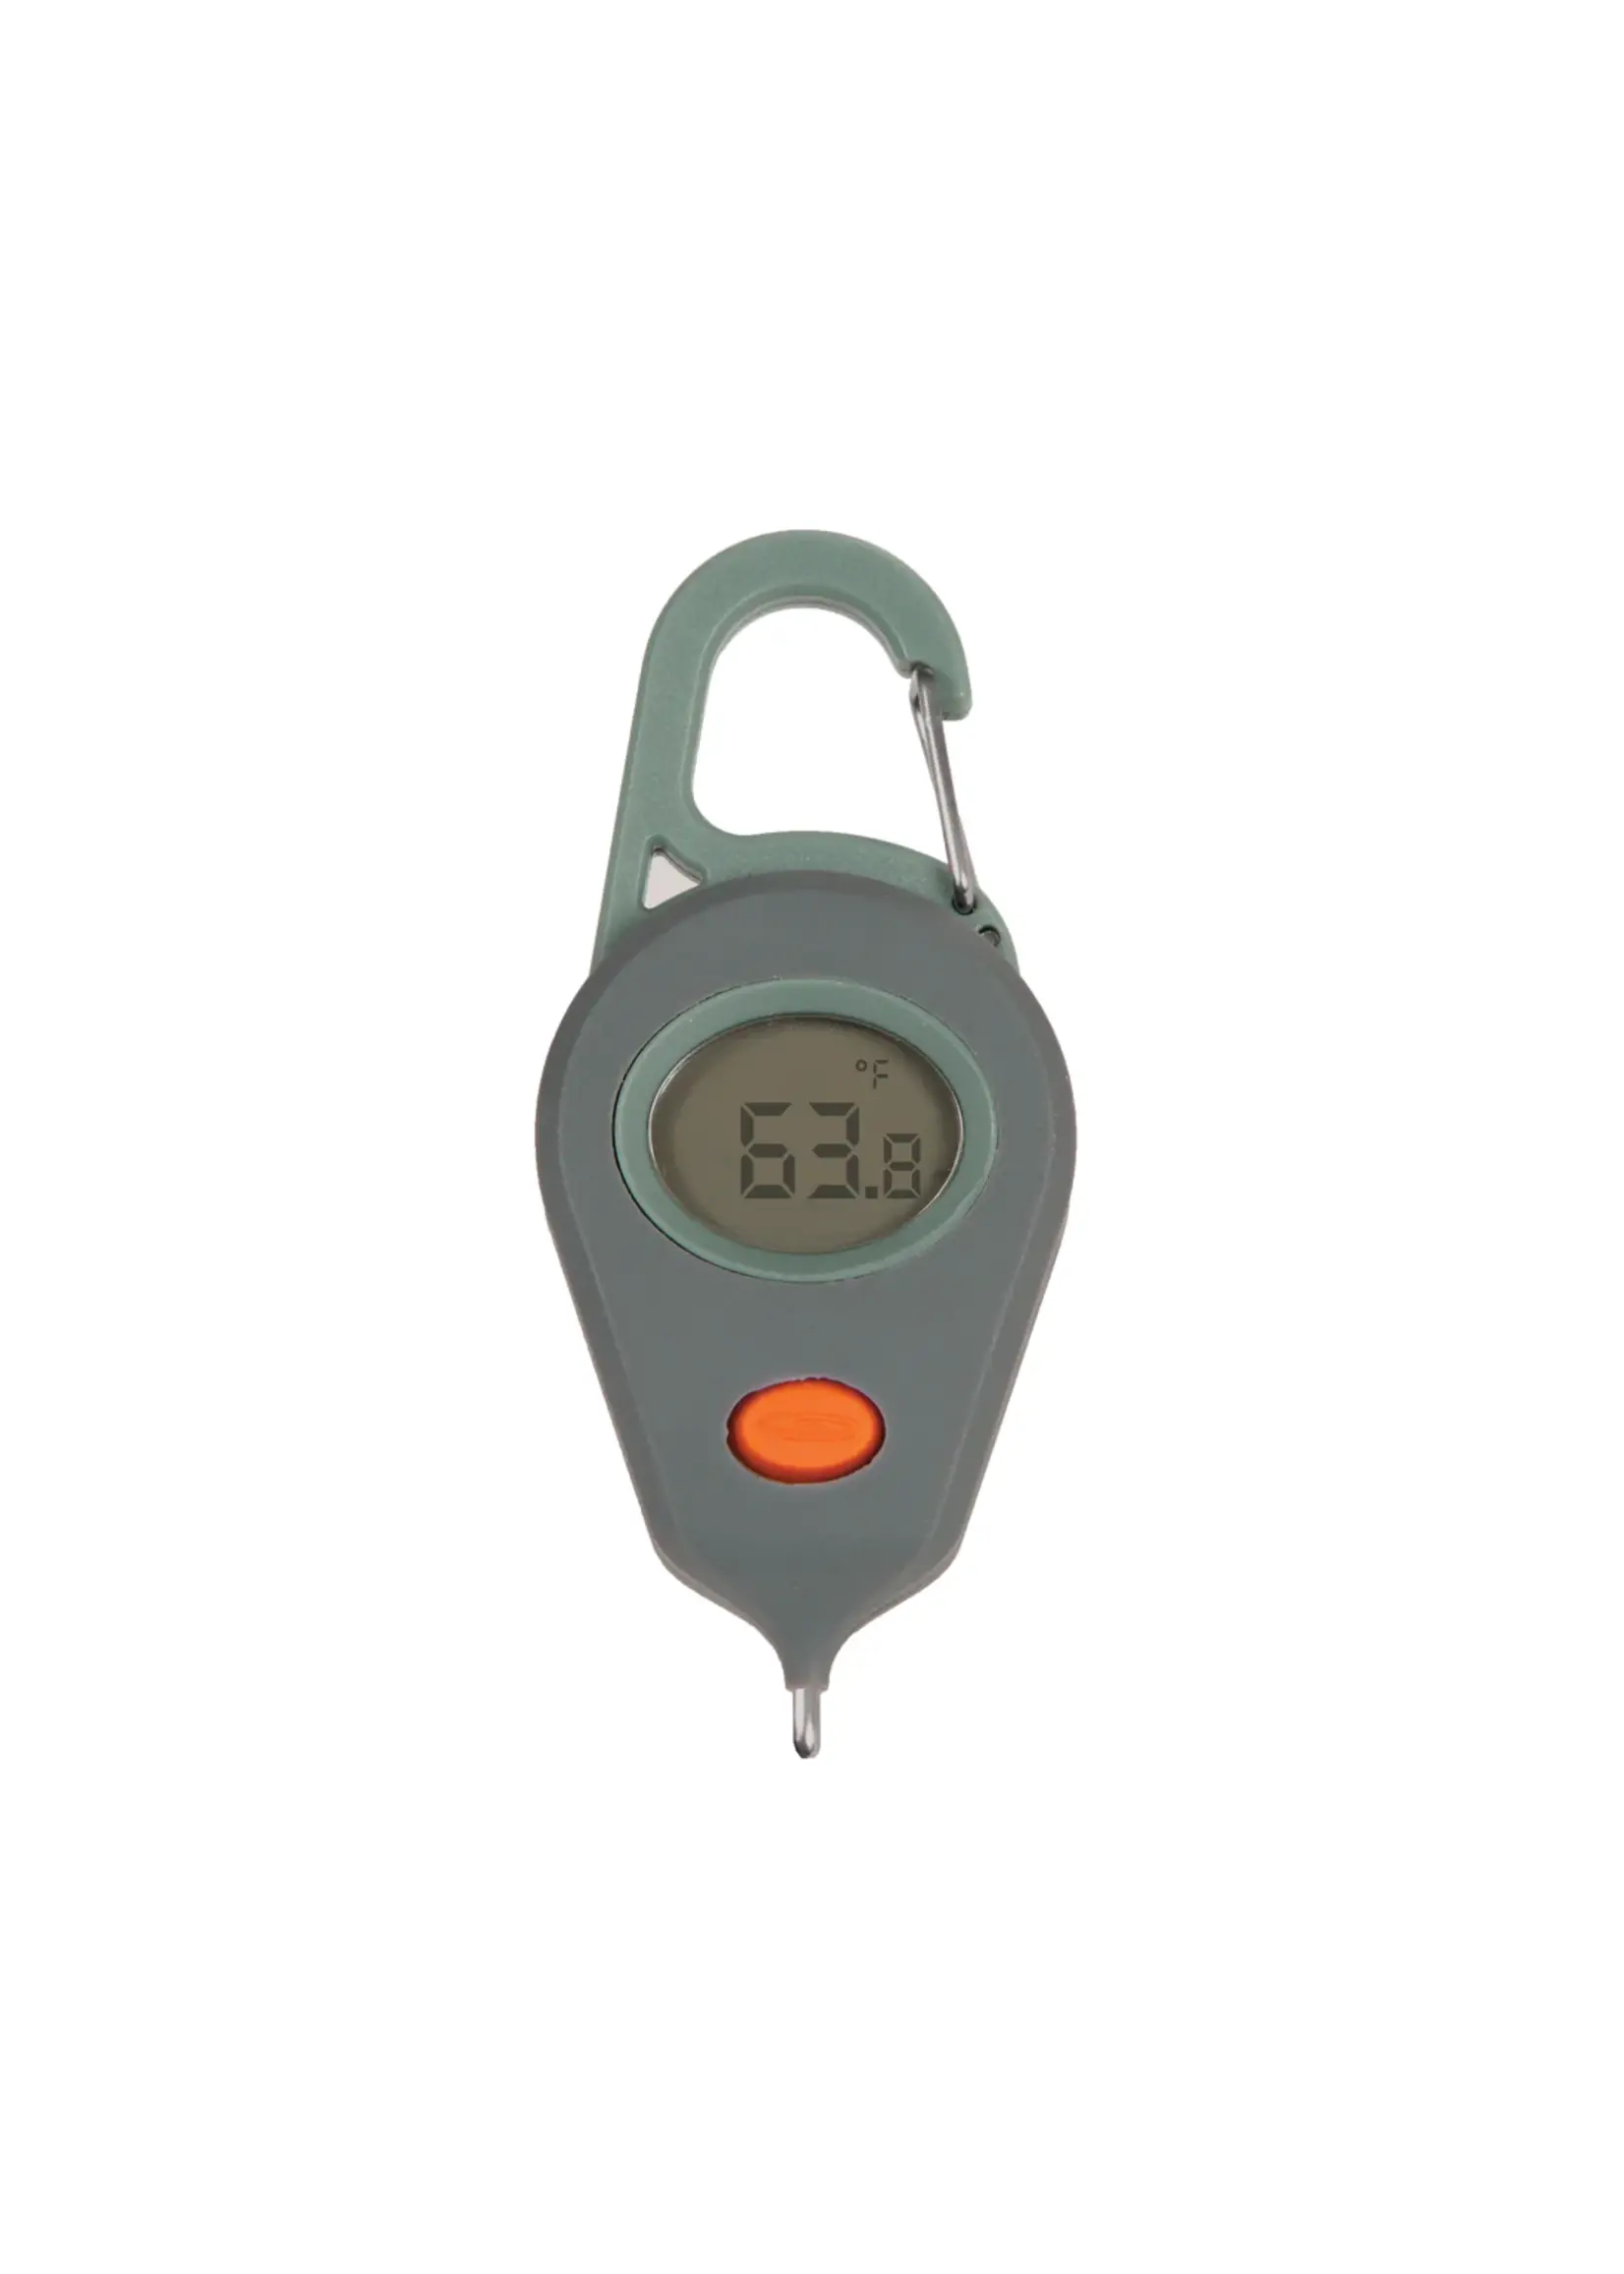 Fishpond Waterproof Riverkeeper Digital Thermometer - Tackle Shack